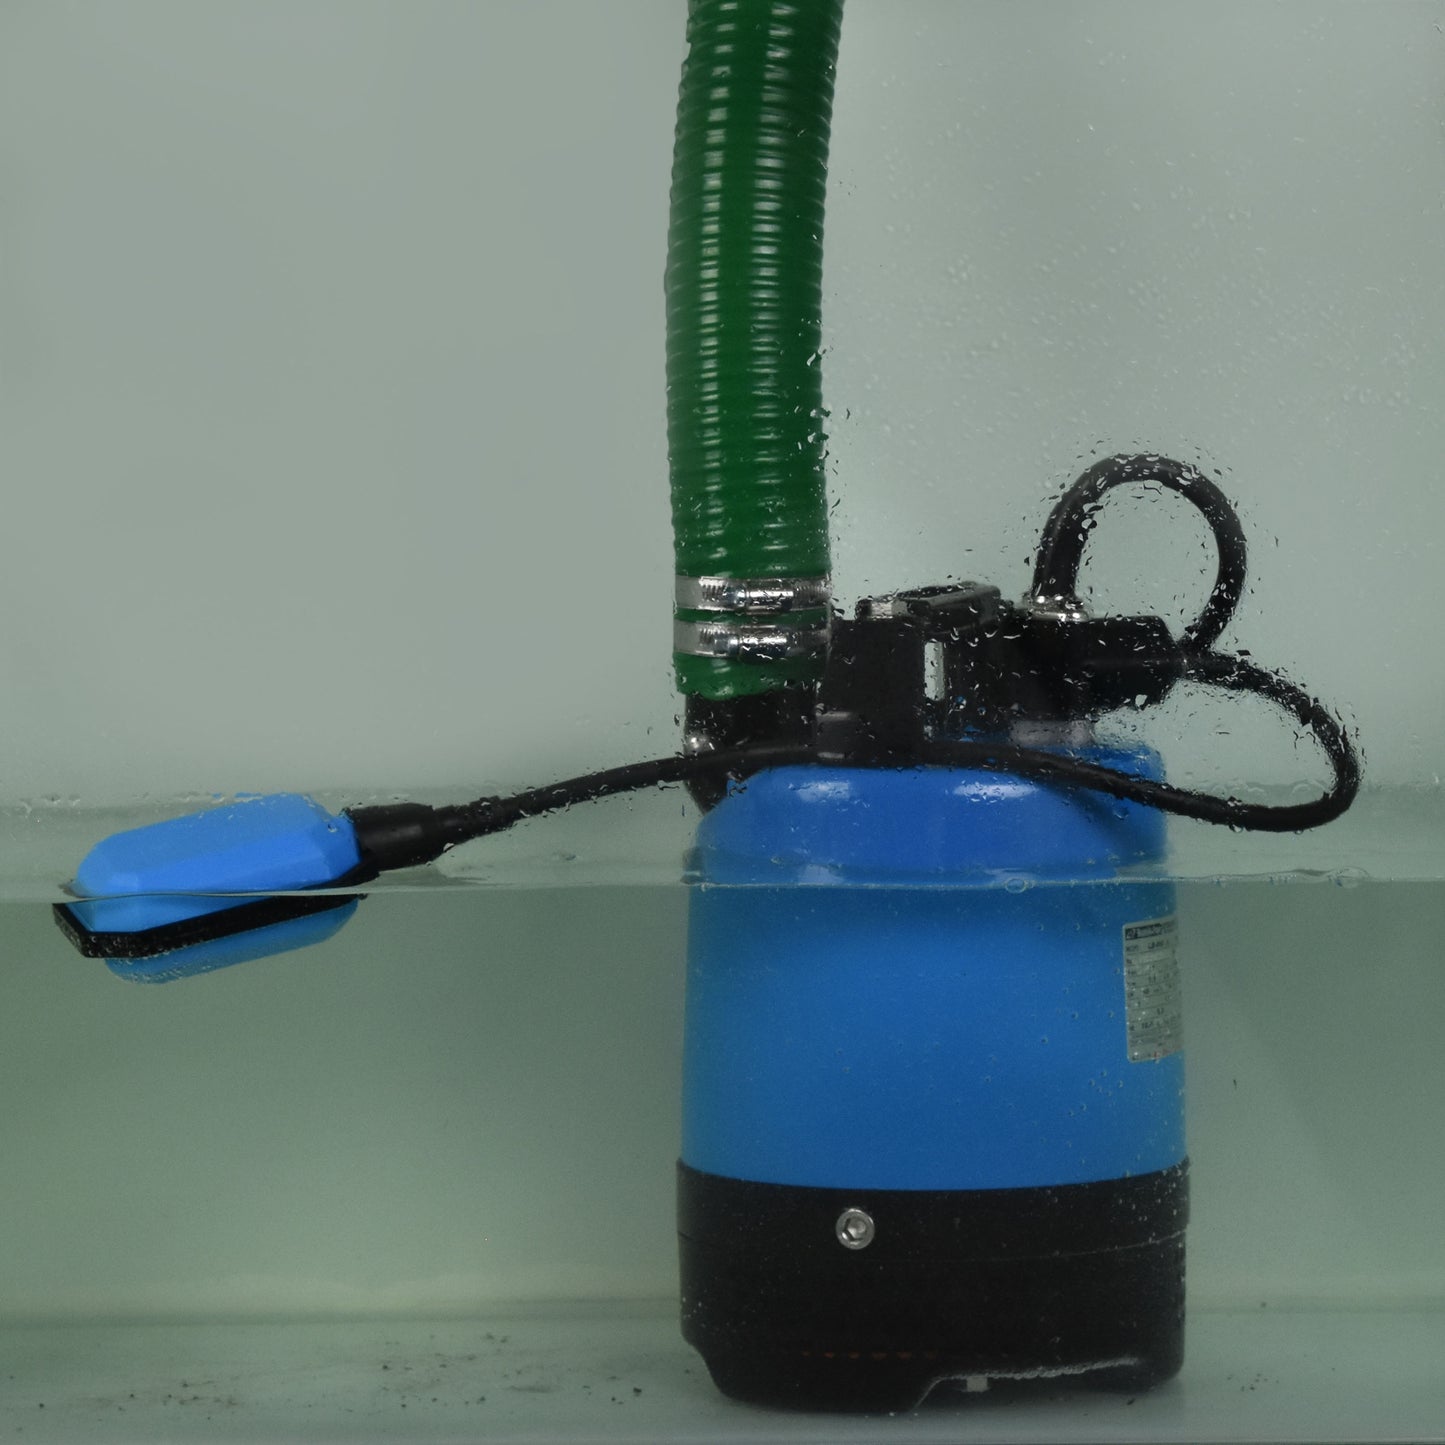 LB (Automatic) Tsurumi Submersible Water Pump